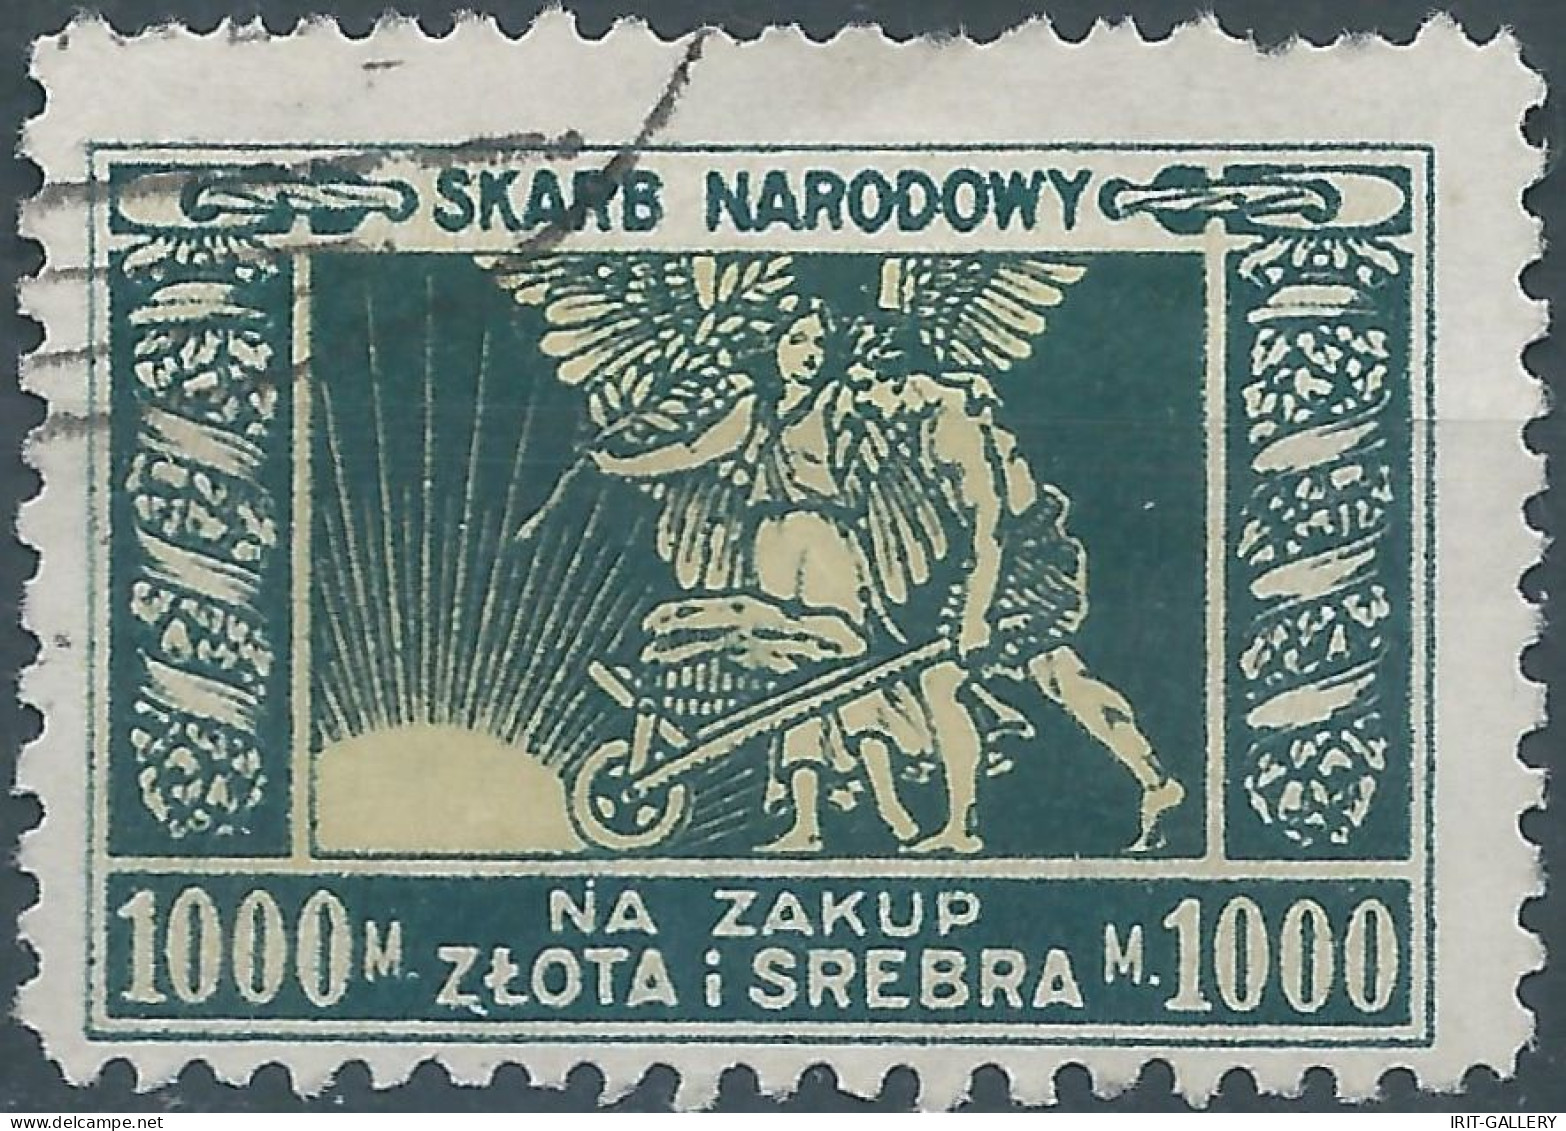 POLONIA-POLAND-POLSKA,1920 Revenue Stamp SKARB NARODOWY NA ZAKUP ZLOTA I SREBRA-NATIONAL TREASURE,1000M,Obliterated - Fiscale Zegels